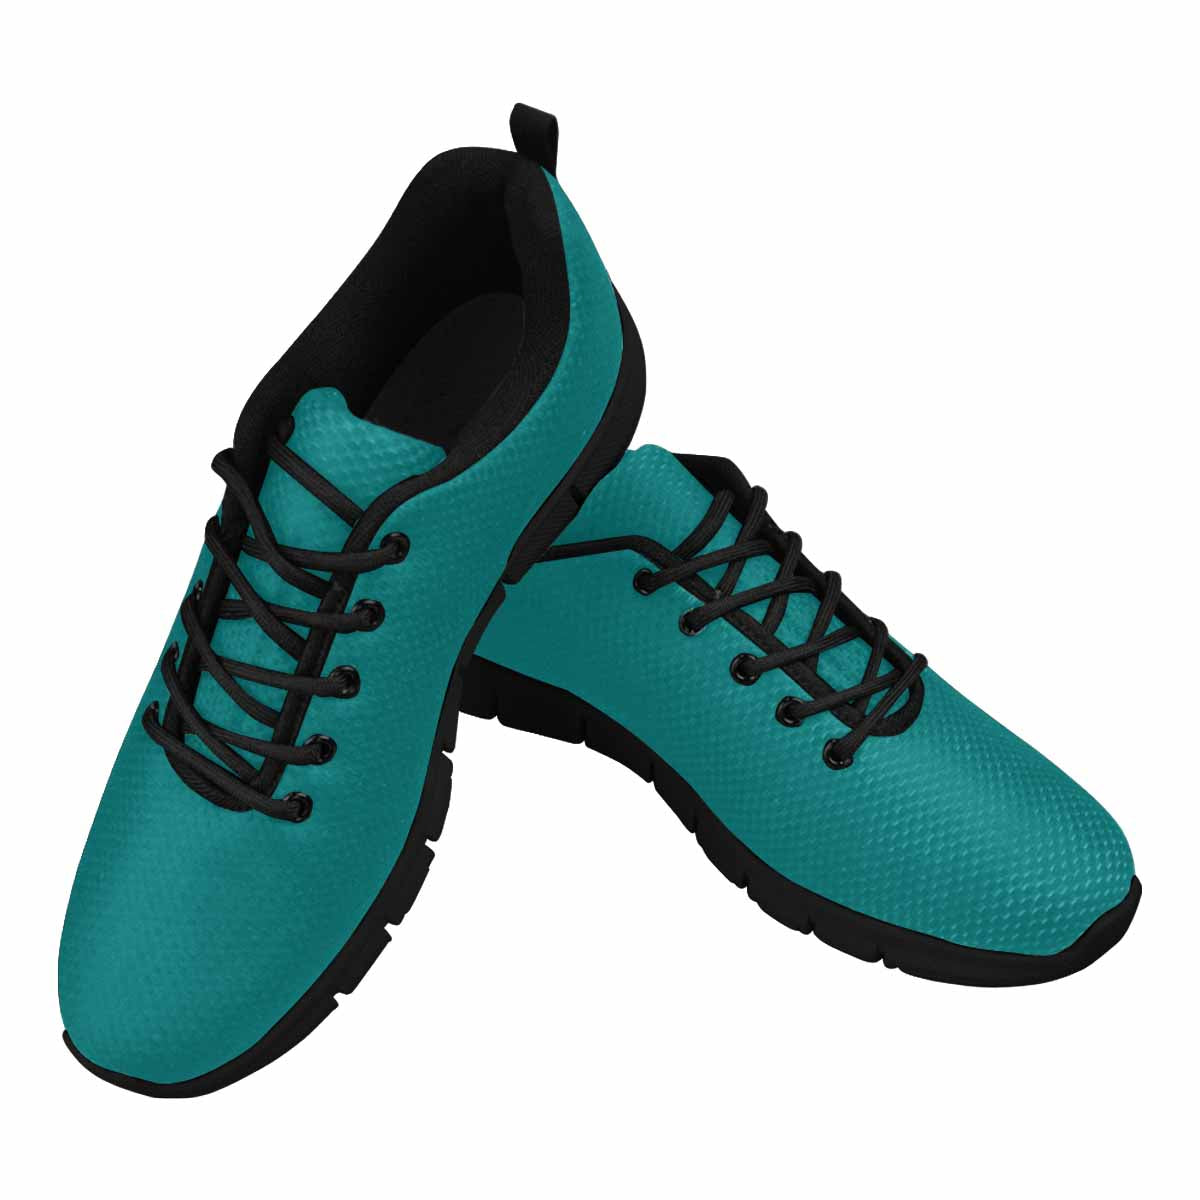 Sneakers For Men, Dark Teal Green Running Shoes